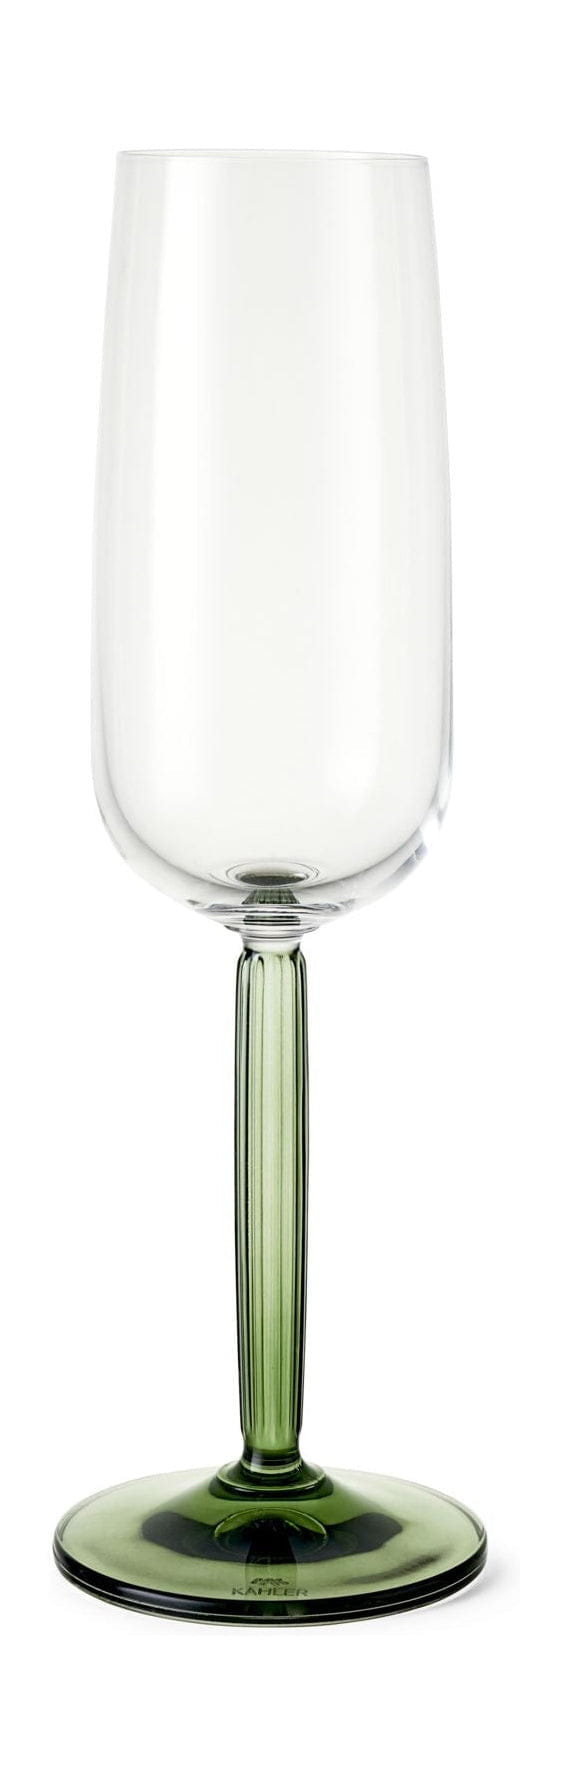 Kähler Hammershøi Champagnerglas Set von 240 ml, grün